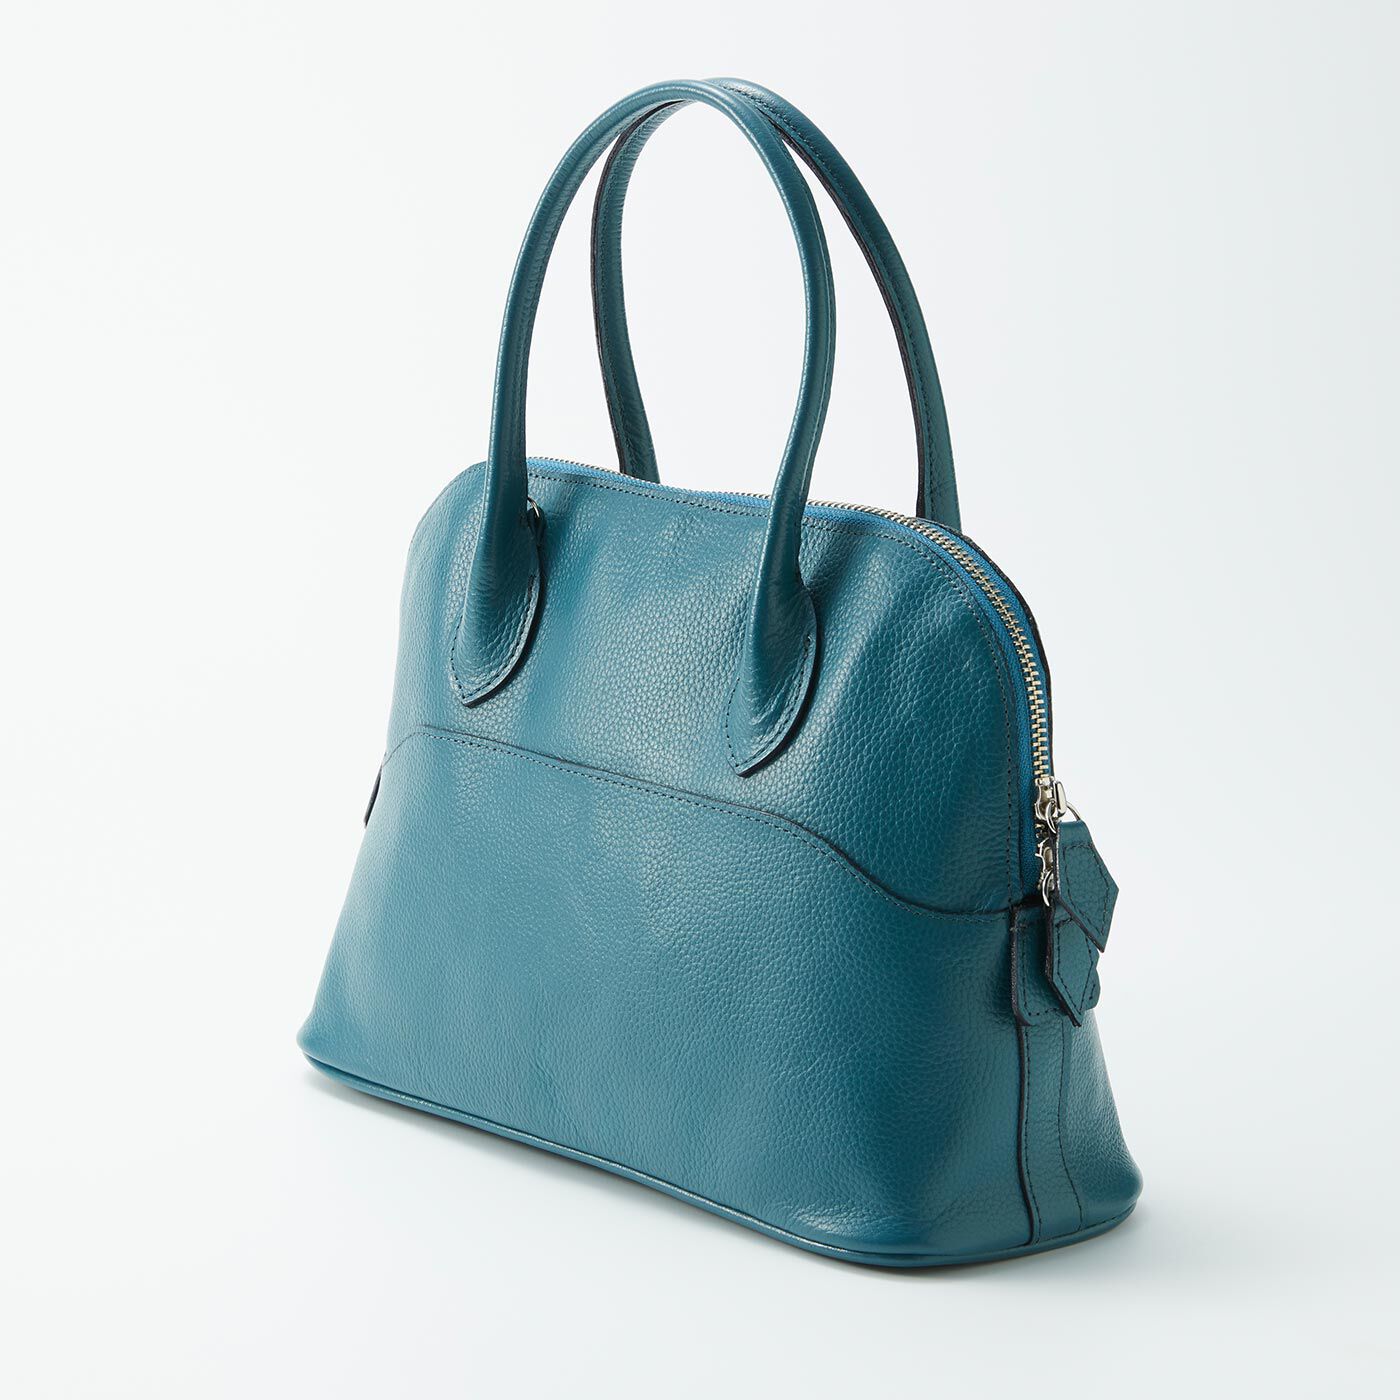 FelissimoLX|LX　大人女性の理想を込めた　本革ブガッティバッグ（サックスブルー）|青が持つさわやかさとグレーの上品な大人っぽさが合わさった魅了的なカラー。